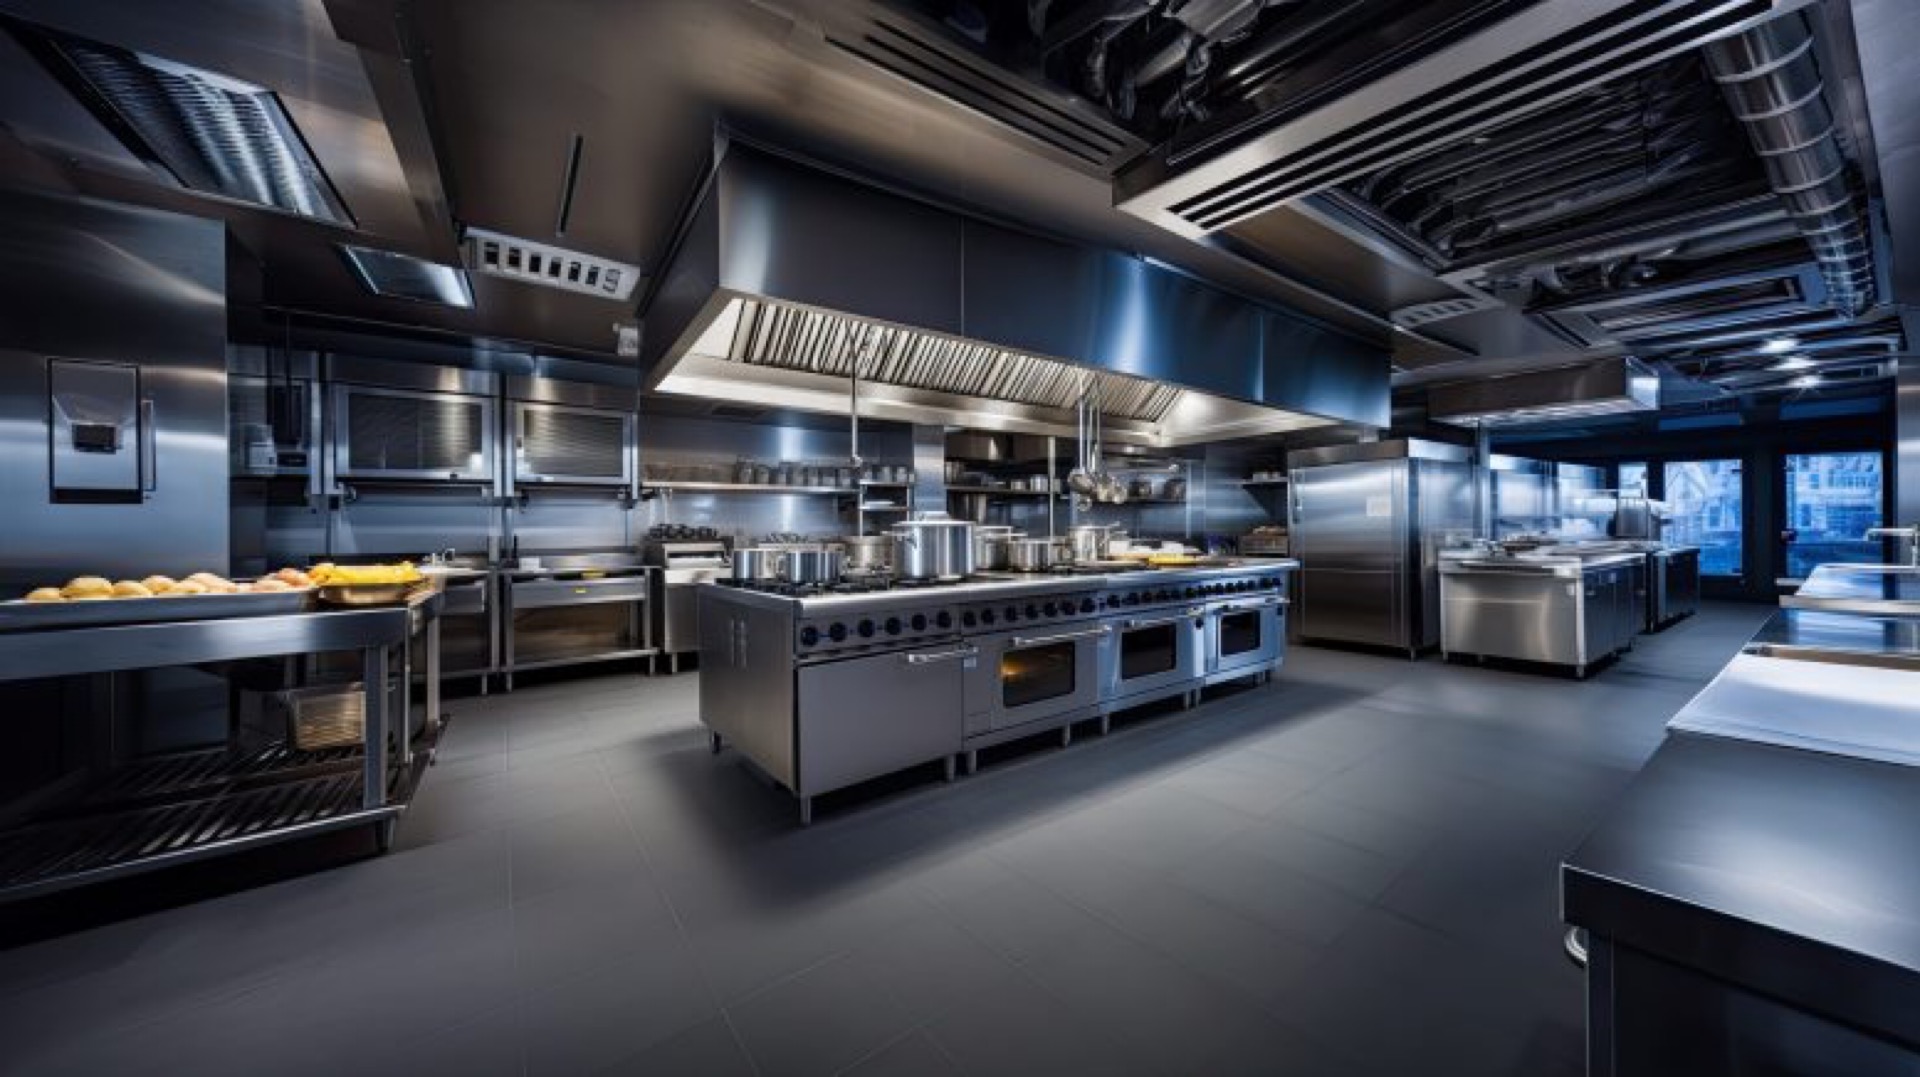 Choosing kitchen equipment for enhanced operational efficiency